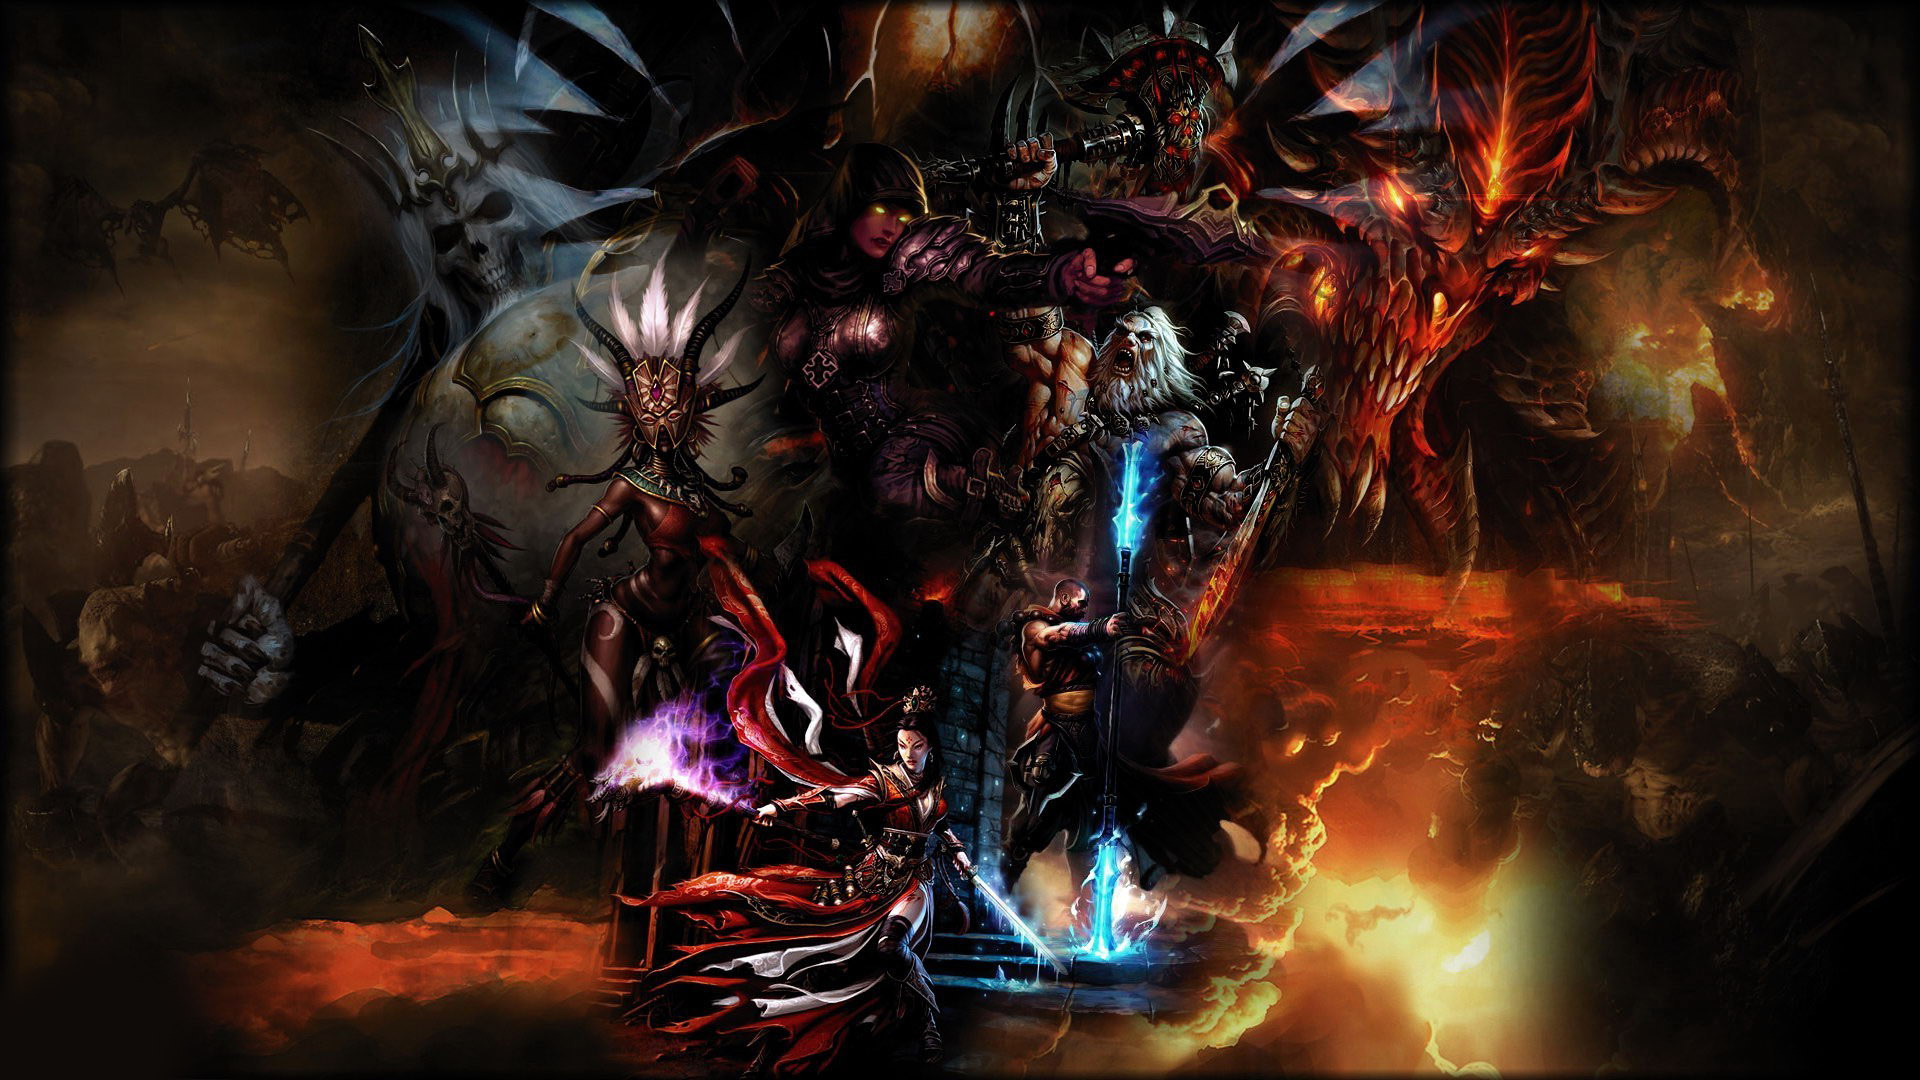 3hd wallpaper,action adventure game,pc game,cg artwork,darkness,demon